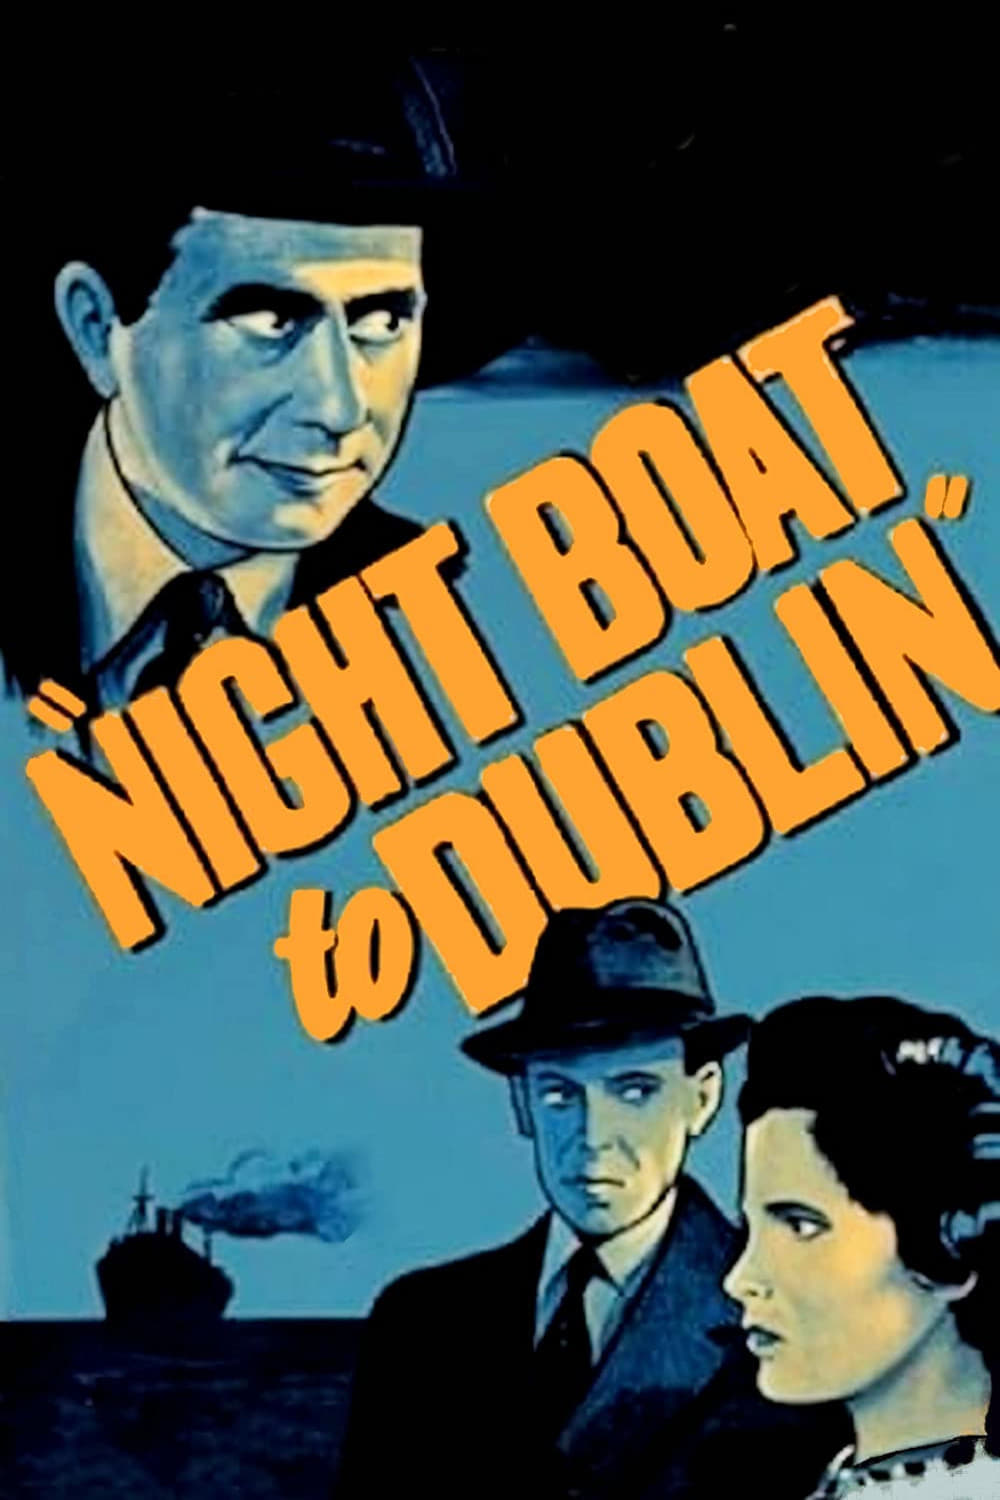 Night Boat to Dublin (1946)